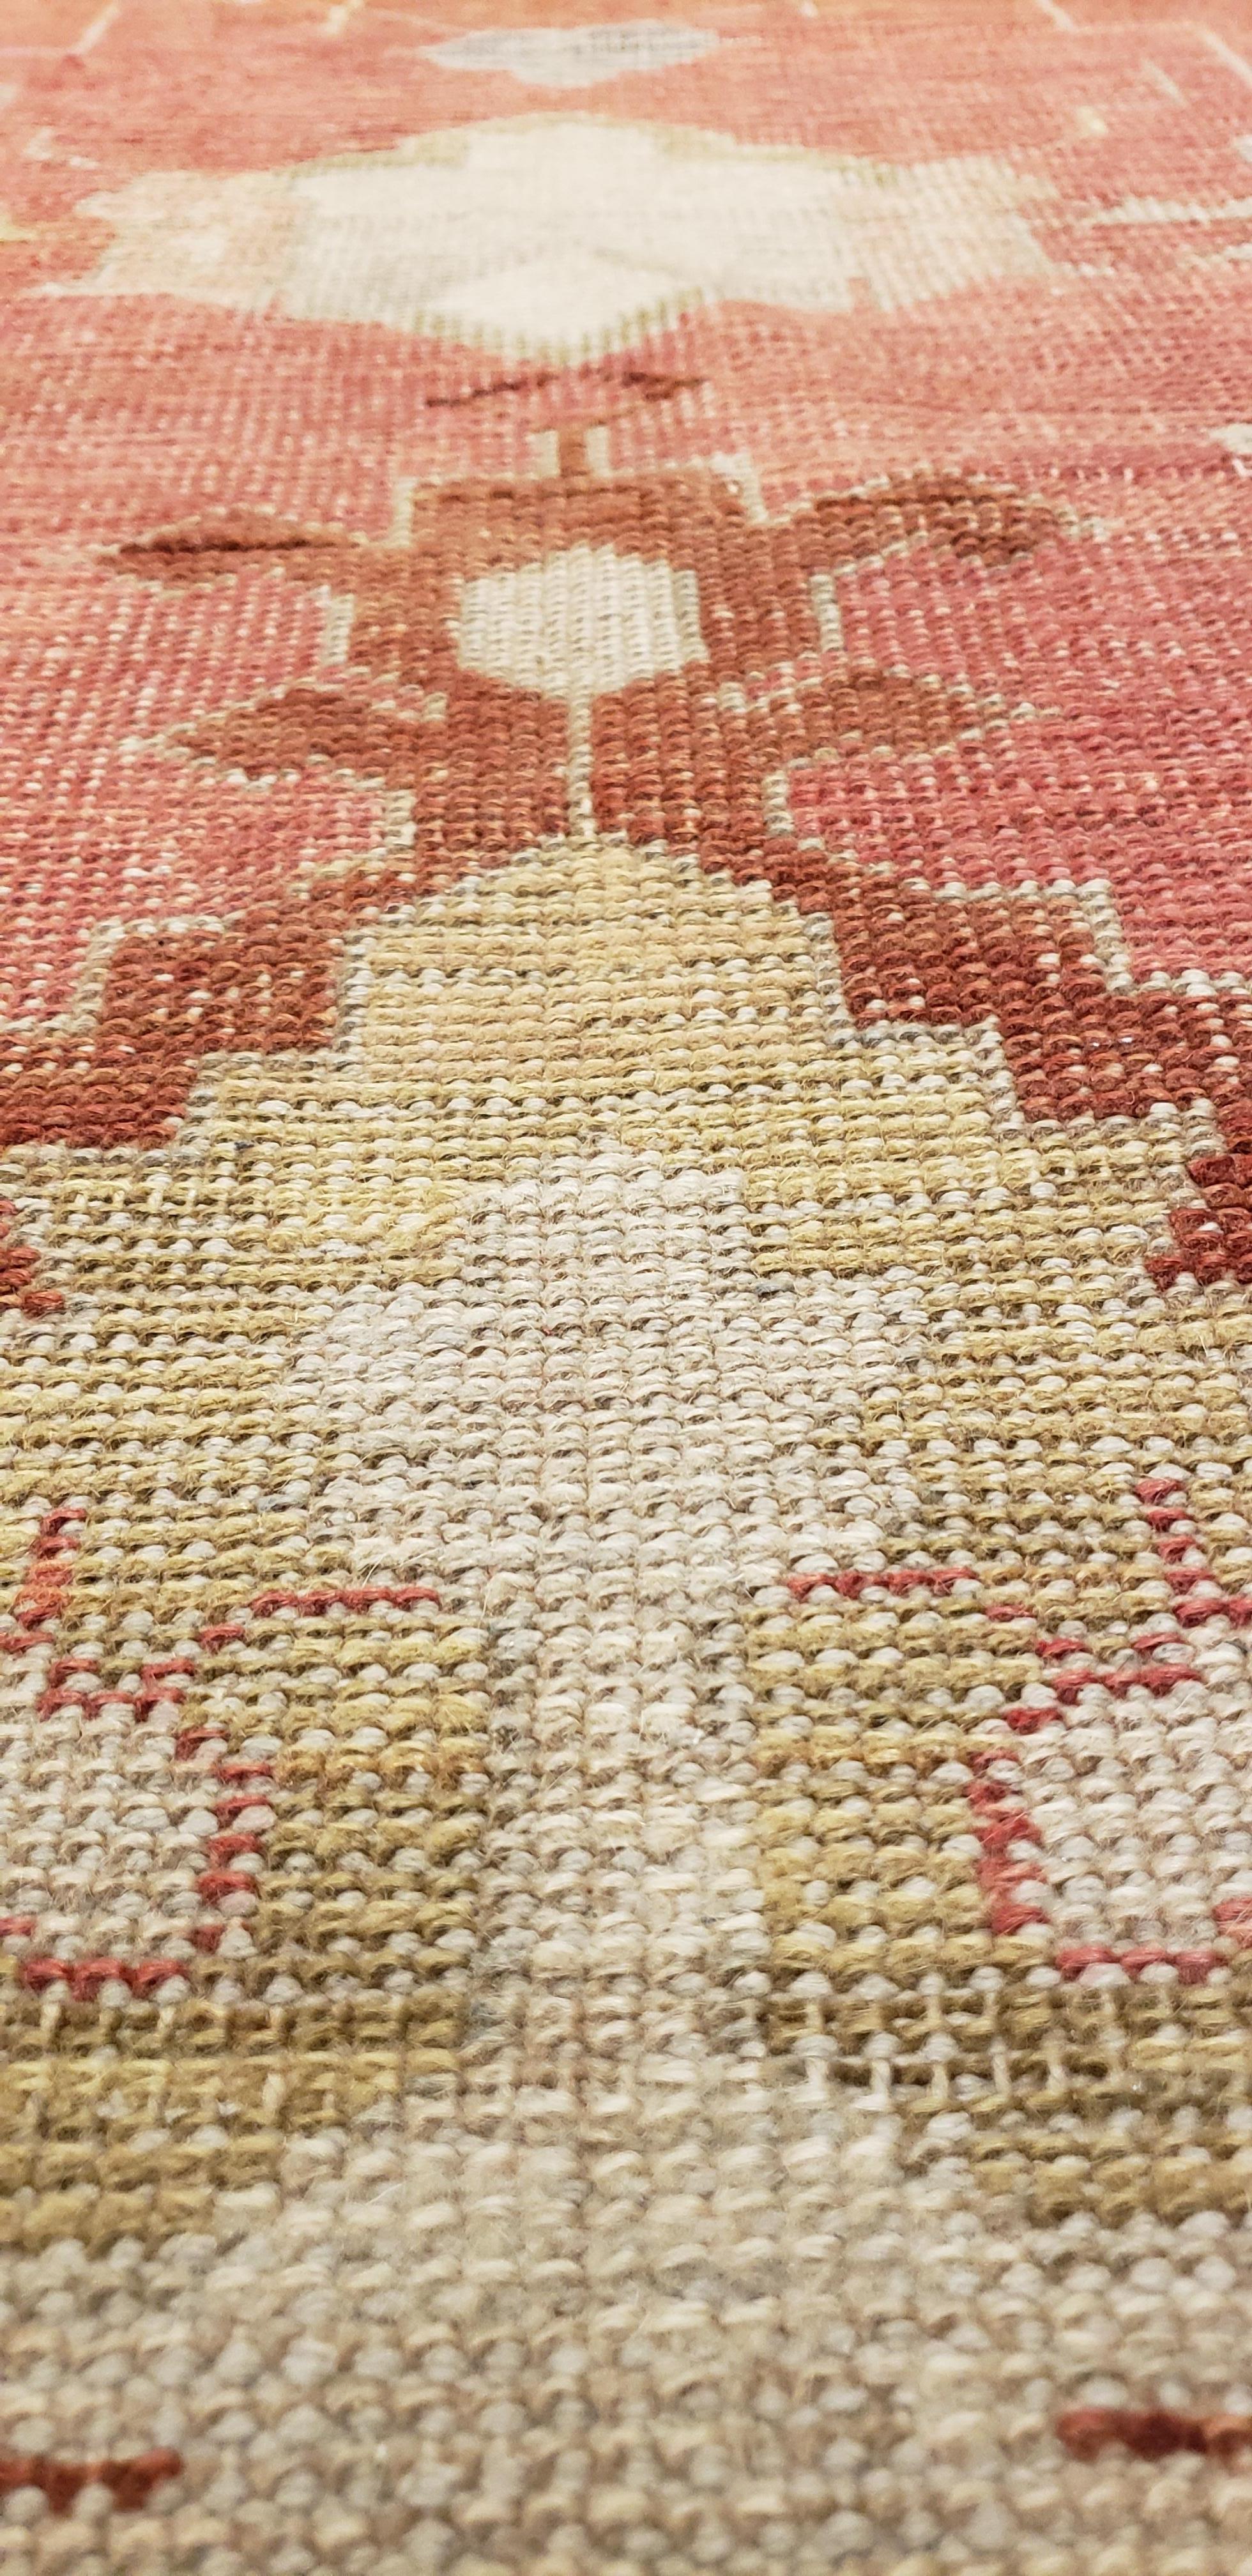 Antique Oushak Carpet, Handmade Turkish Oriental Rug, Beige, Coral, Soft Colors For Sale 9